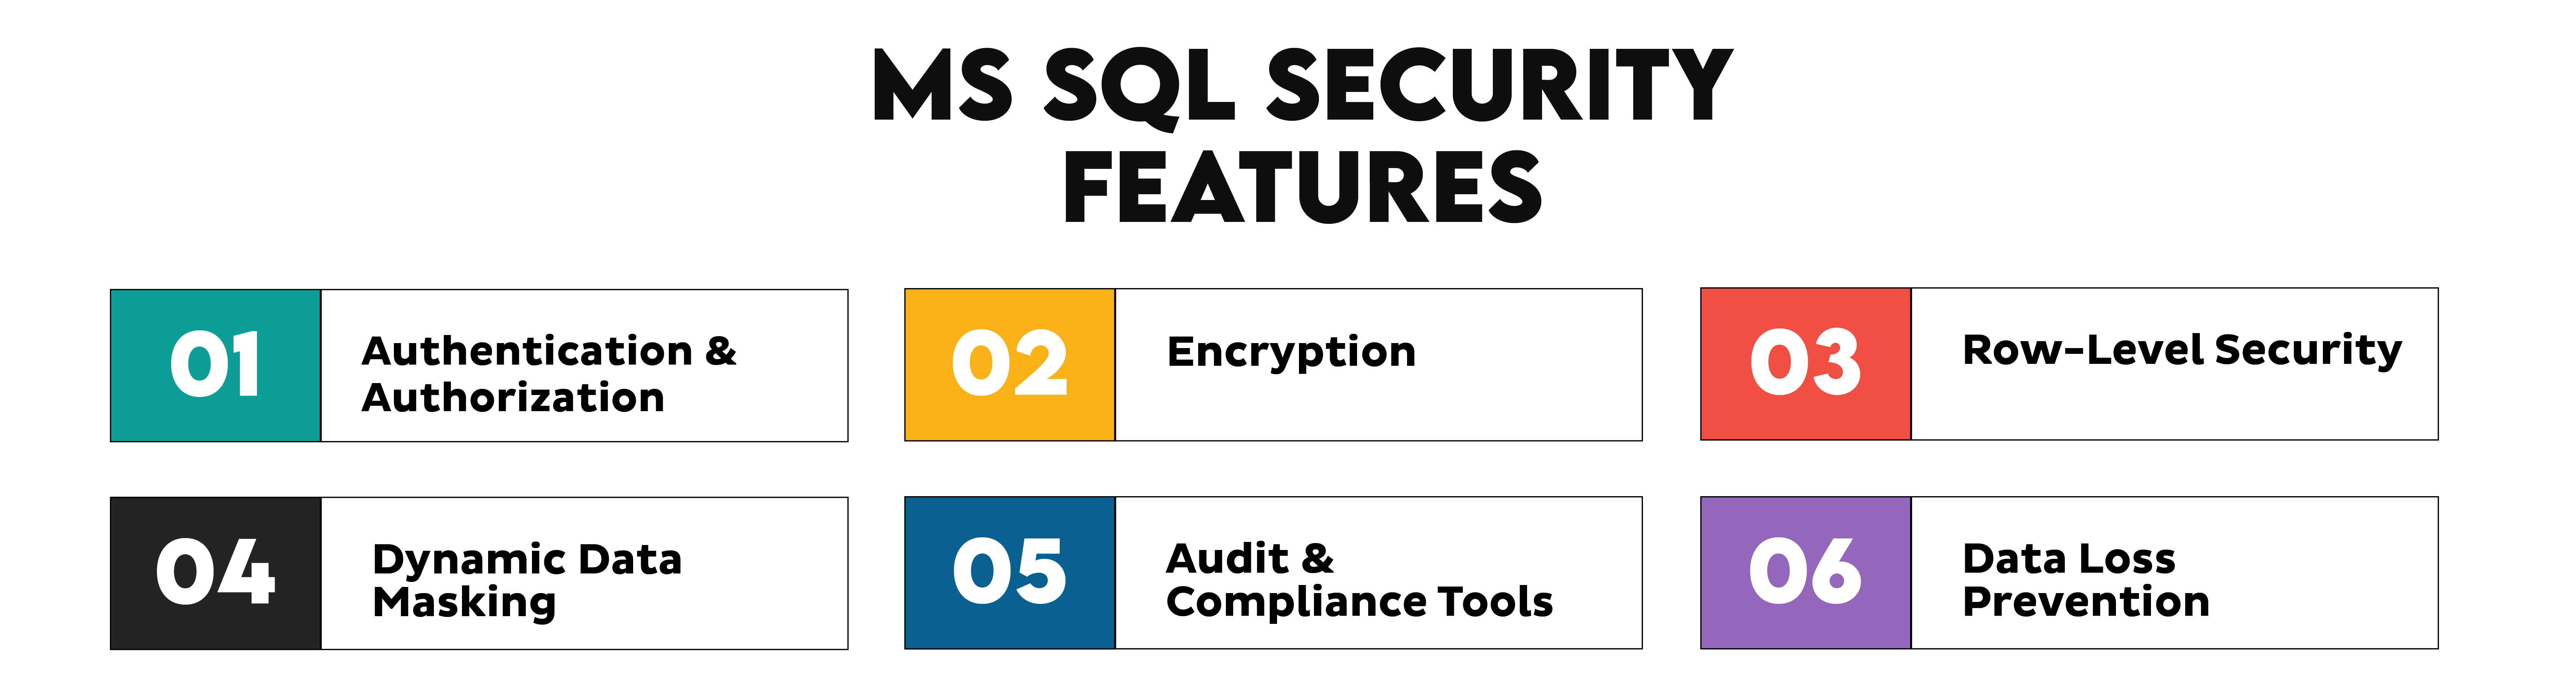 MySQL vs MS SQL Security Features